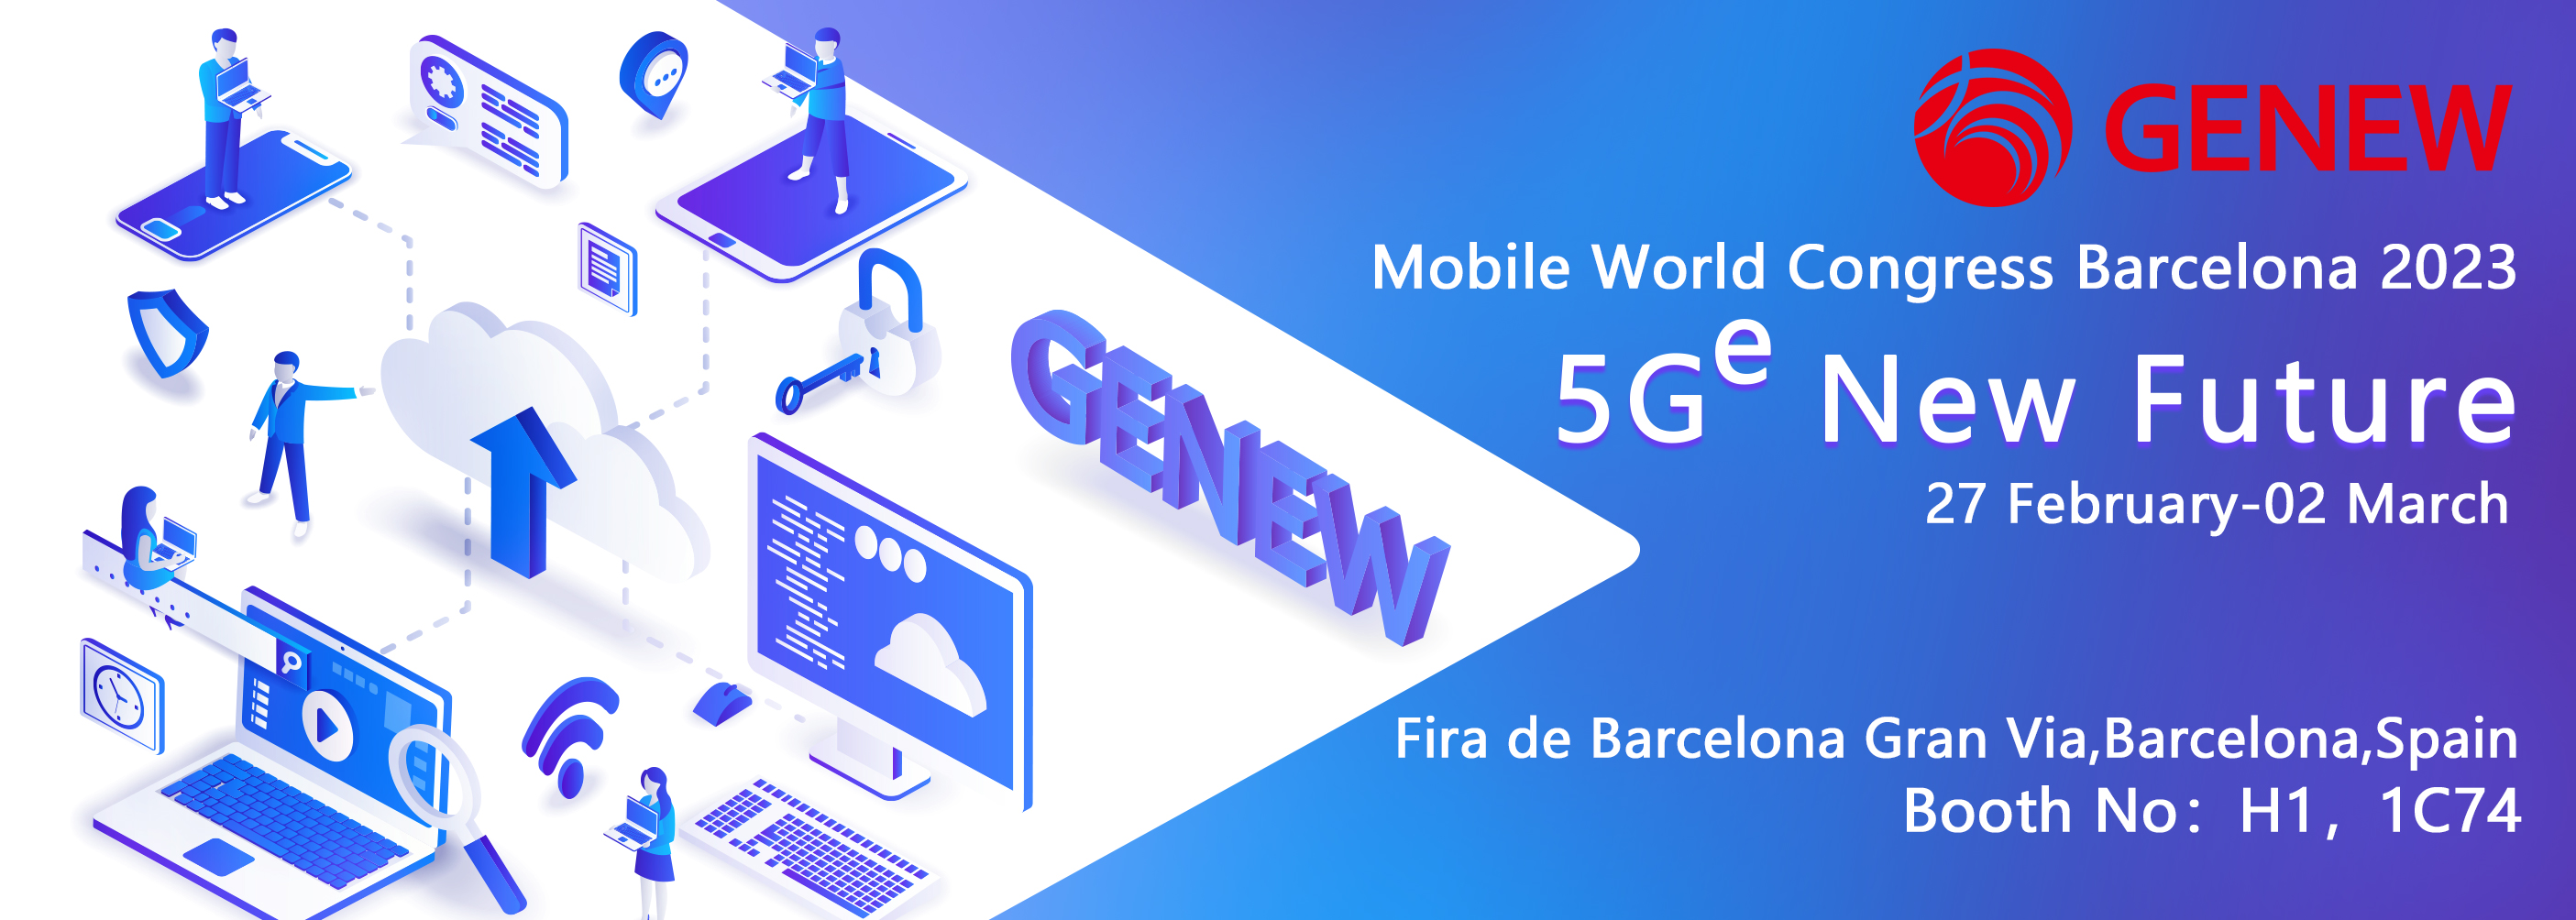 Let’s meet at Mobile World Congress 2023 Barcelona!